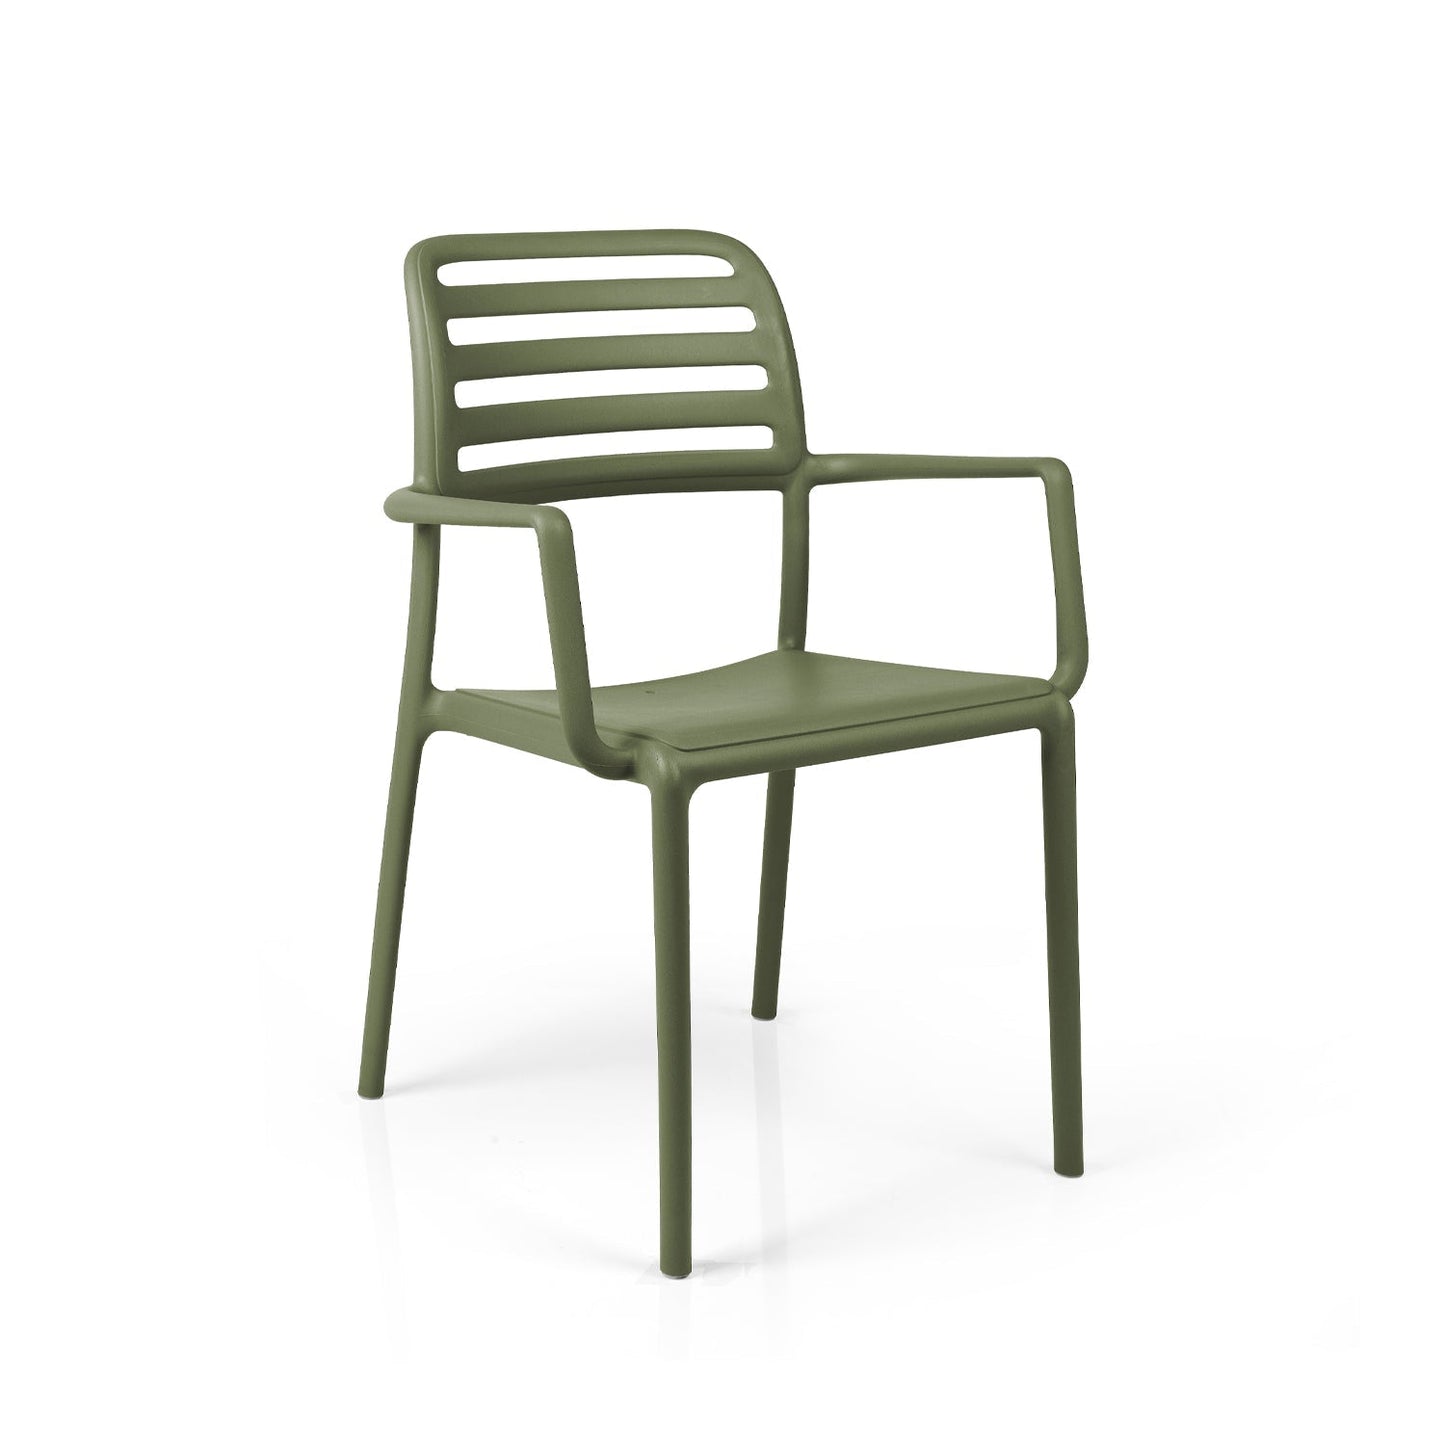 Costa Garden Chair By Nardi - Olive